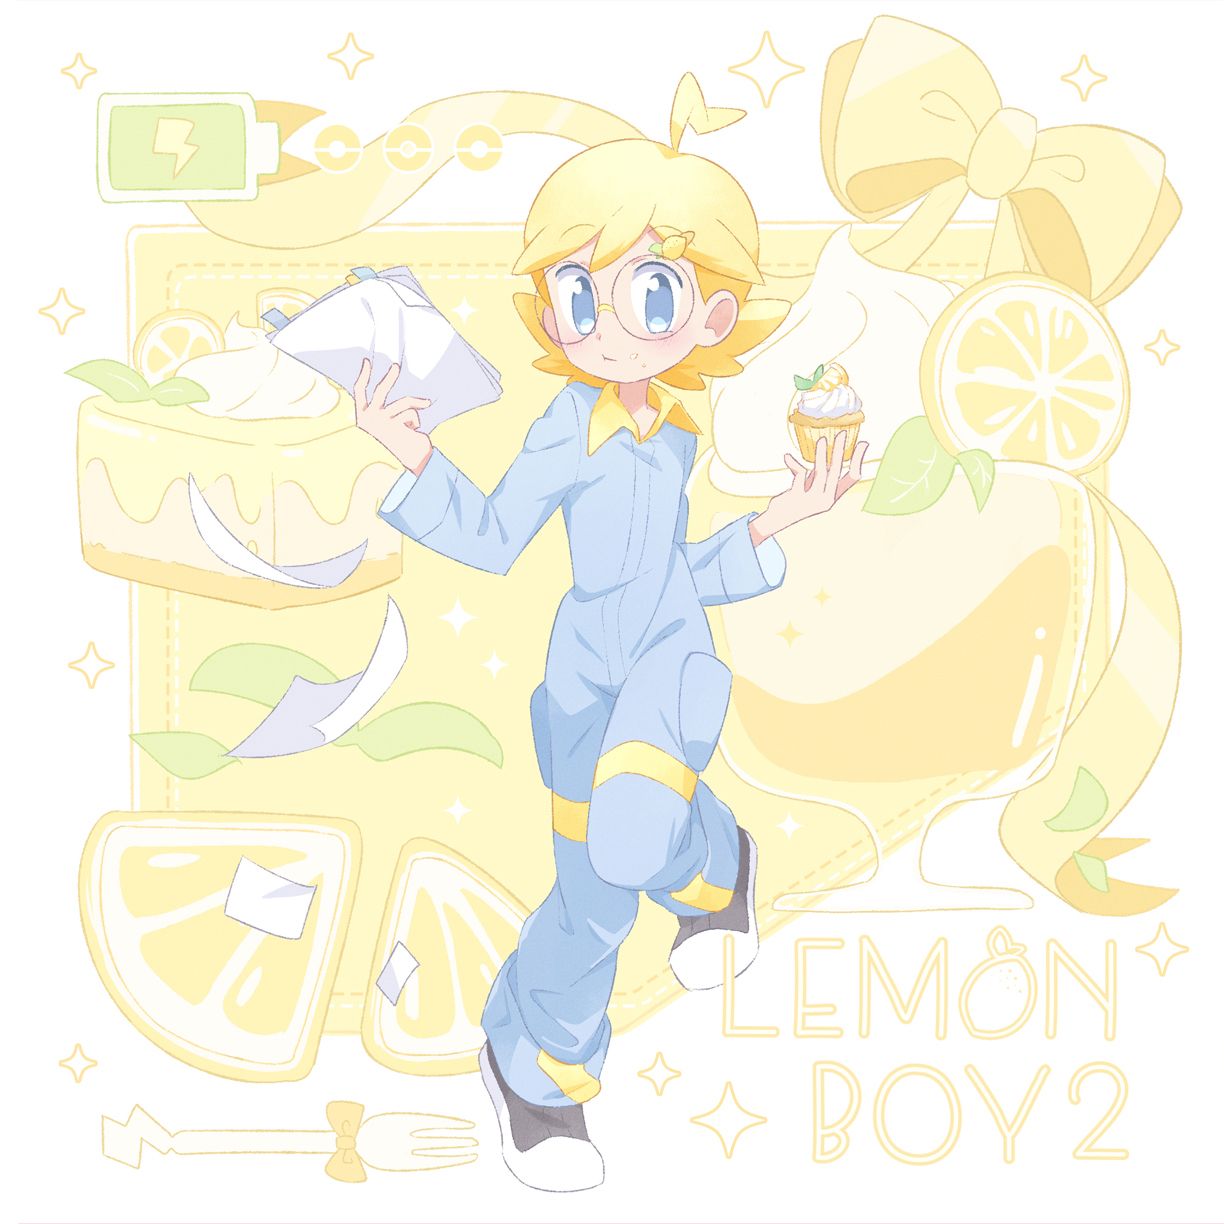 【Lemon boy 2】史特隆中心全彩塗鴉本